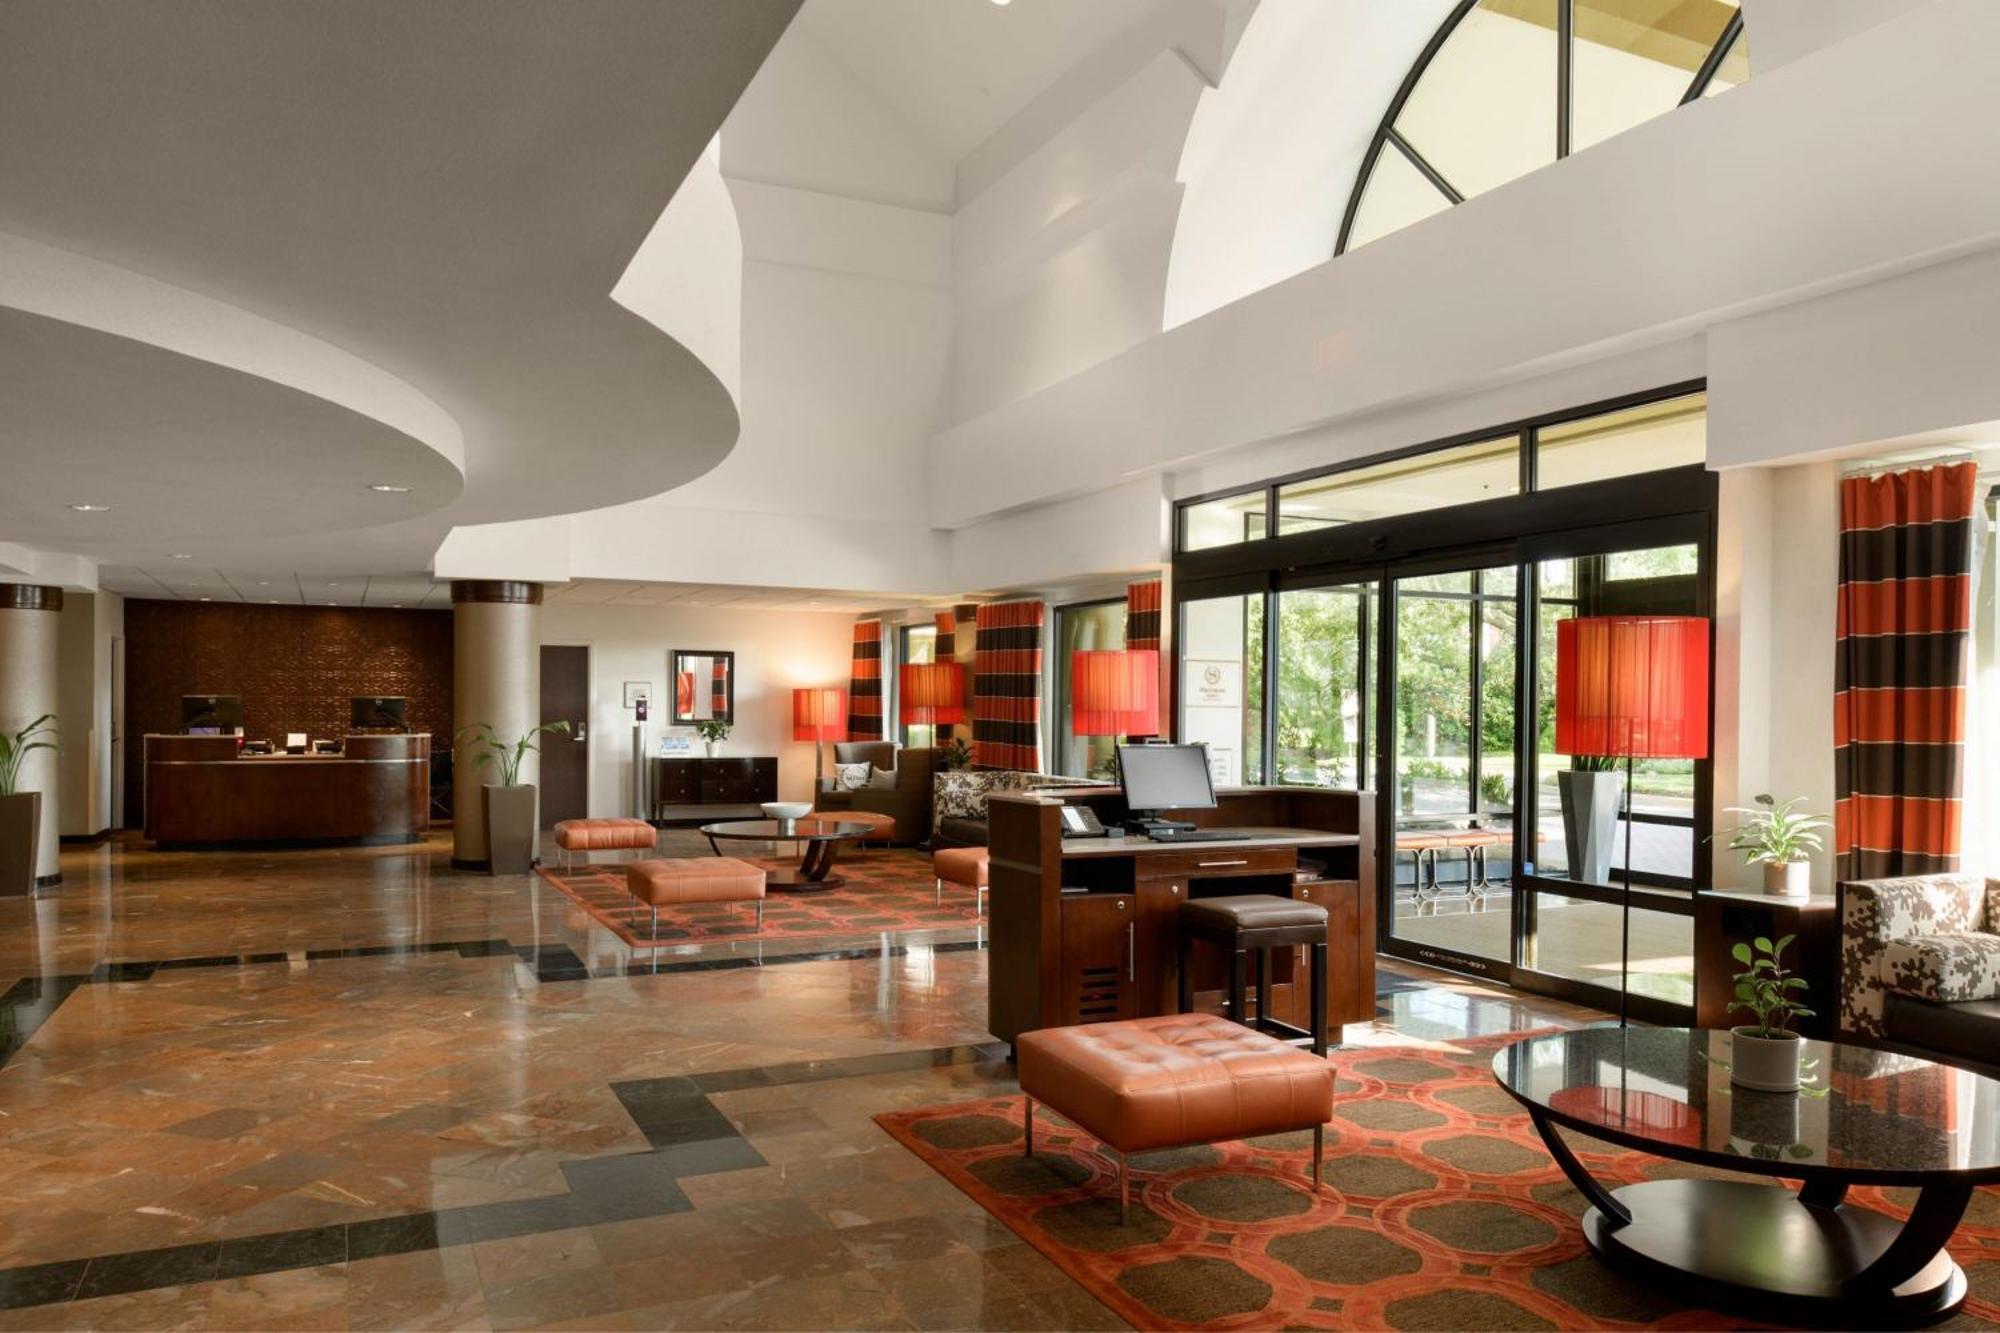 Sheraton Suites Orlando Airport Hotel Exterior photo